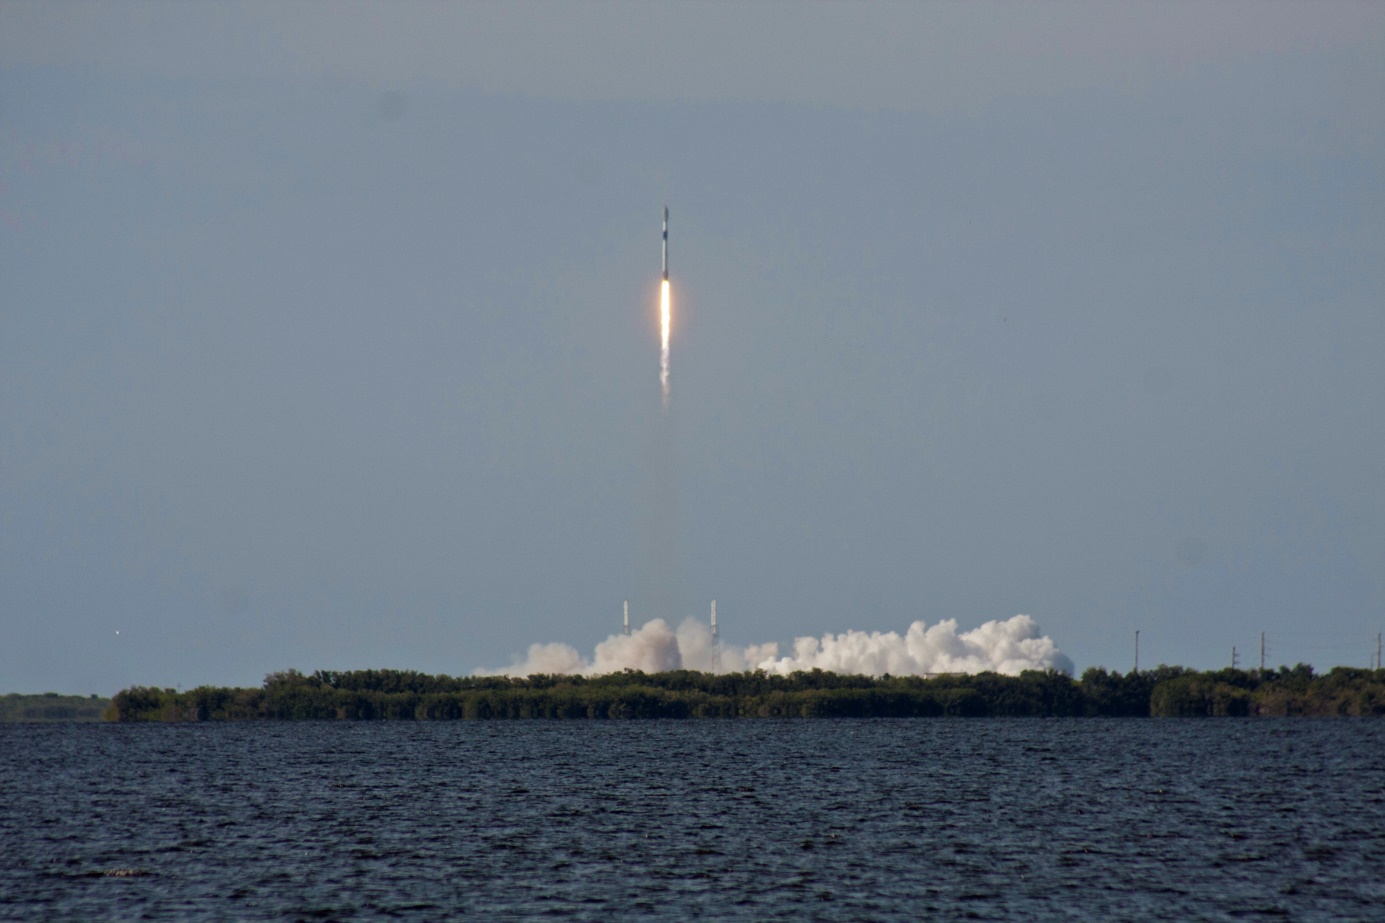 Falcon 9 Starlink 4-15 Launch, Photo Courtesy Carleton Bailie, Spaceline